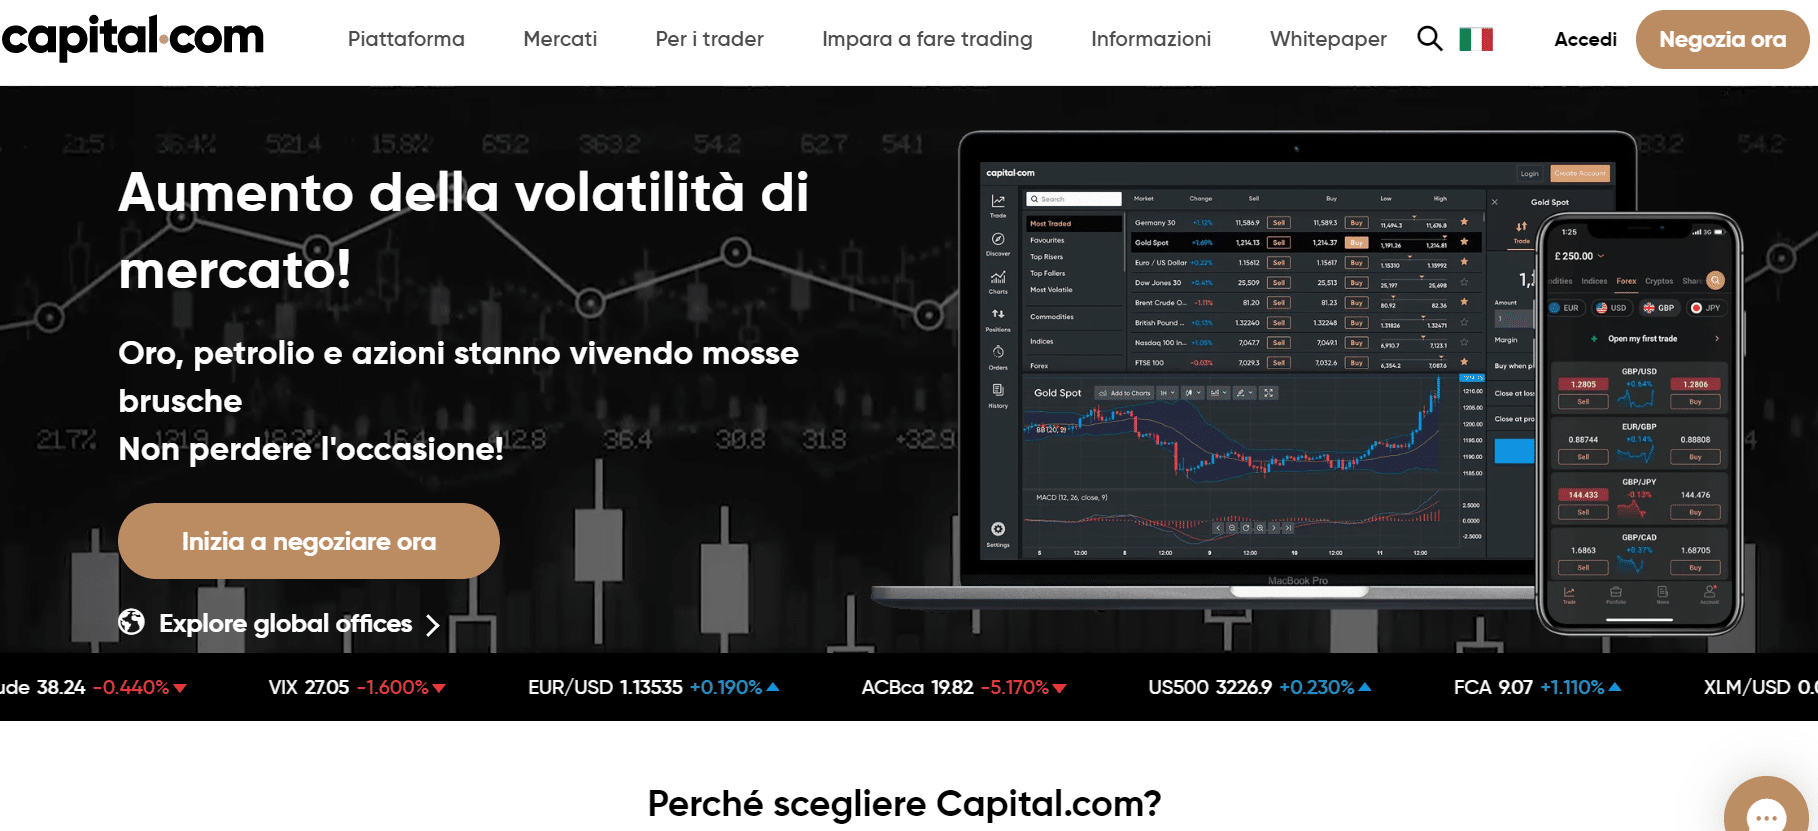 Capital.com per trading usd/rub